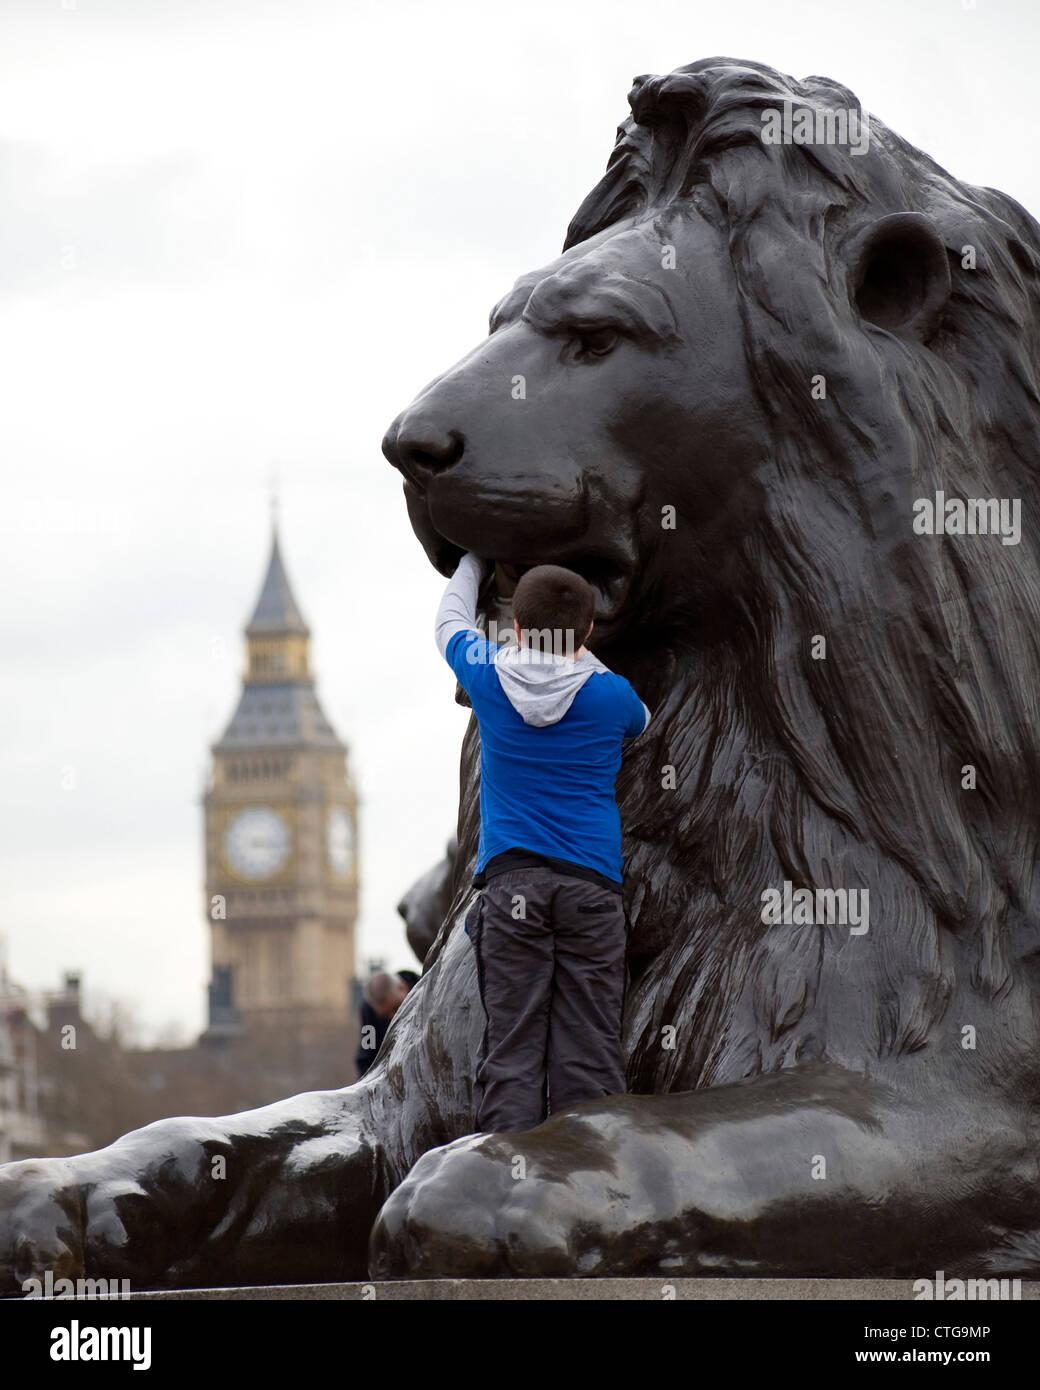 Boy climbing on a Landseer Lion in Trafalgar Square Stock Photo